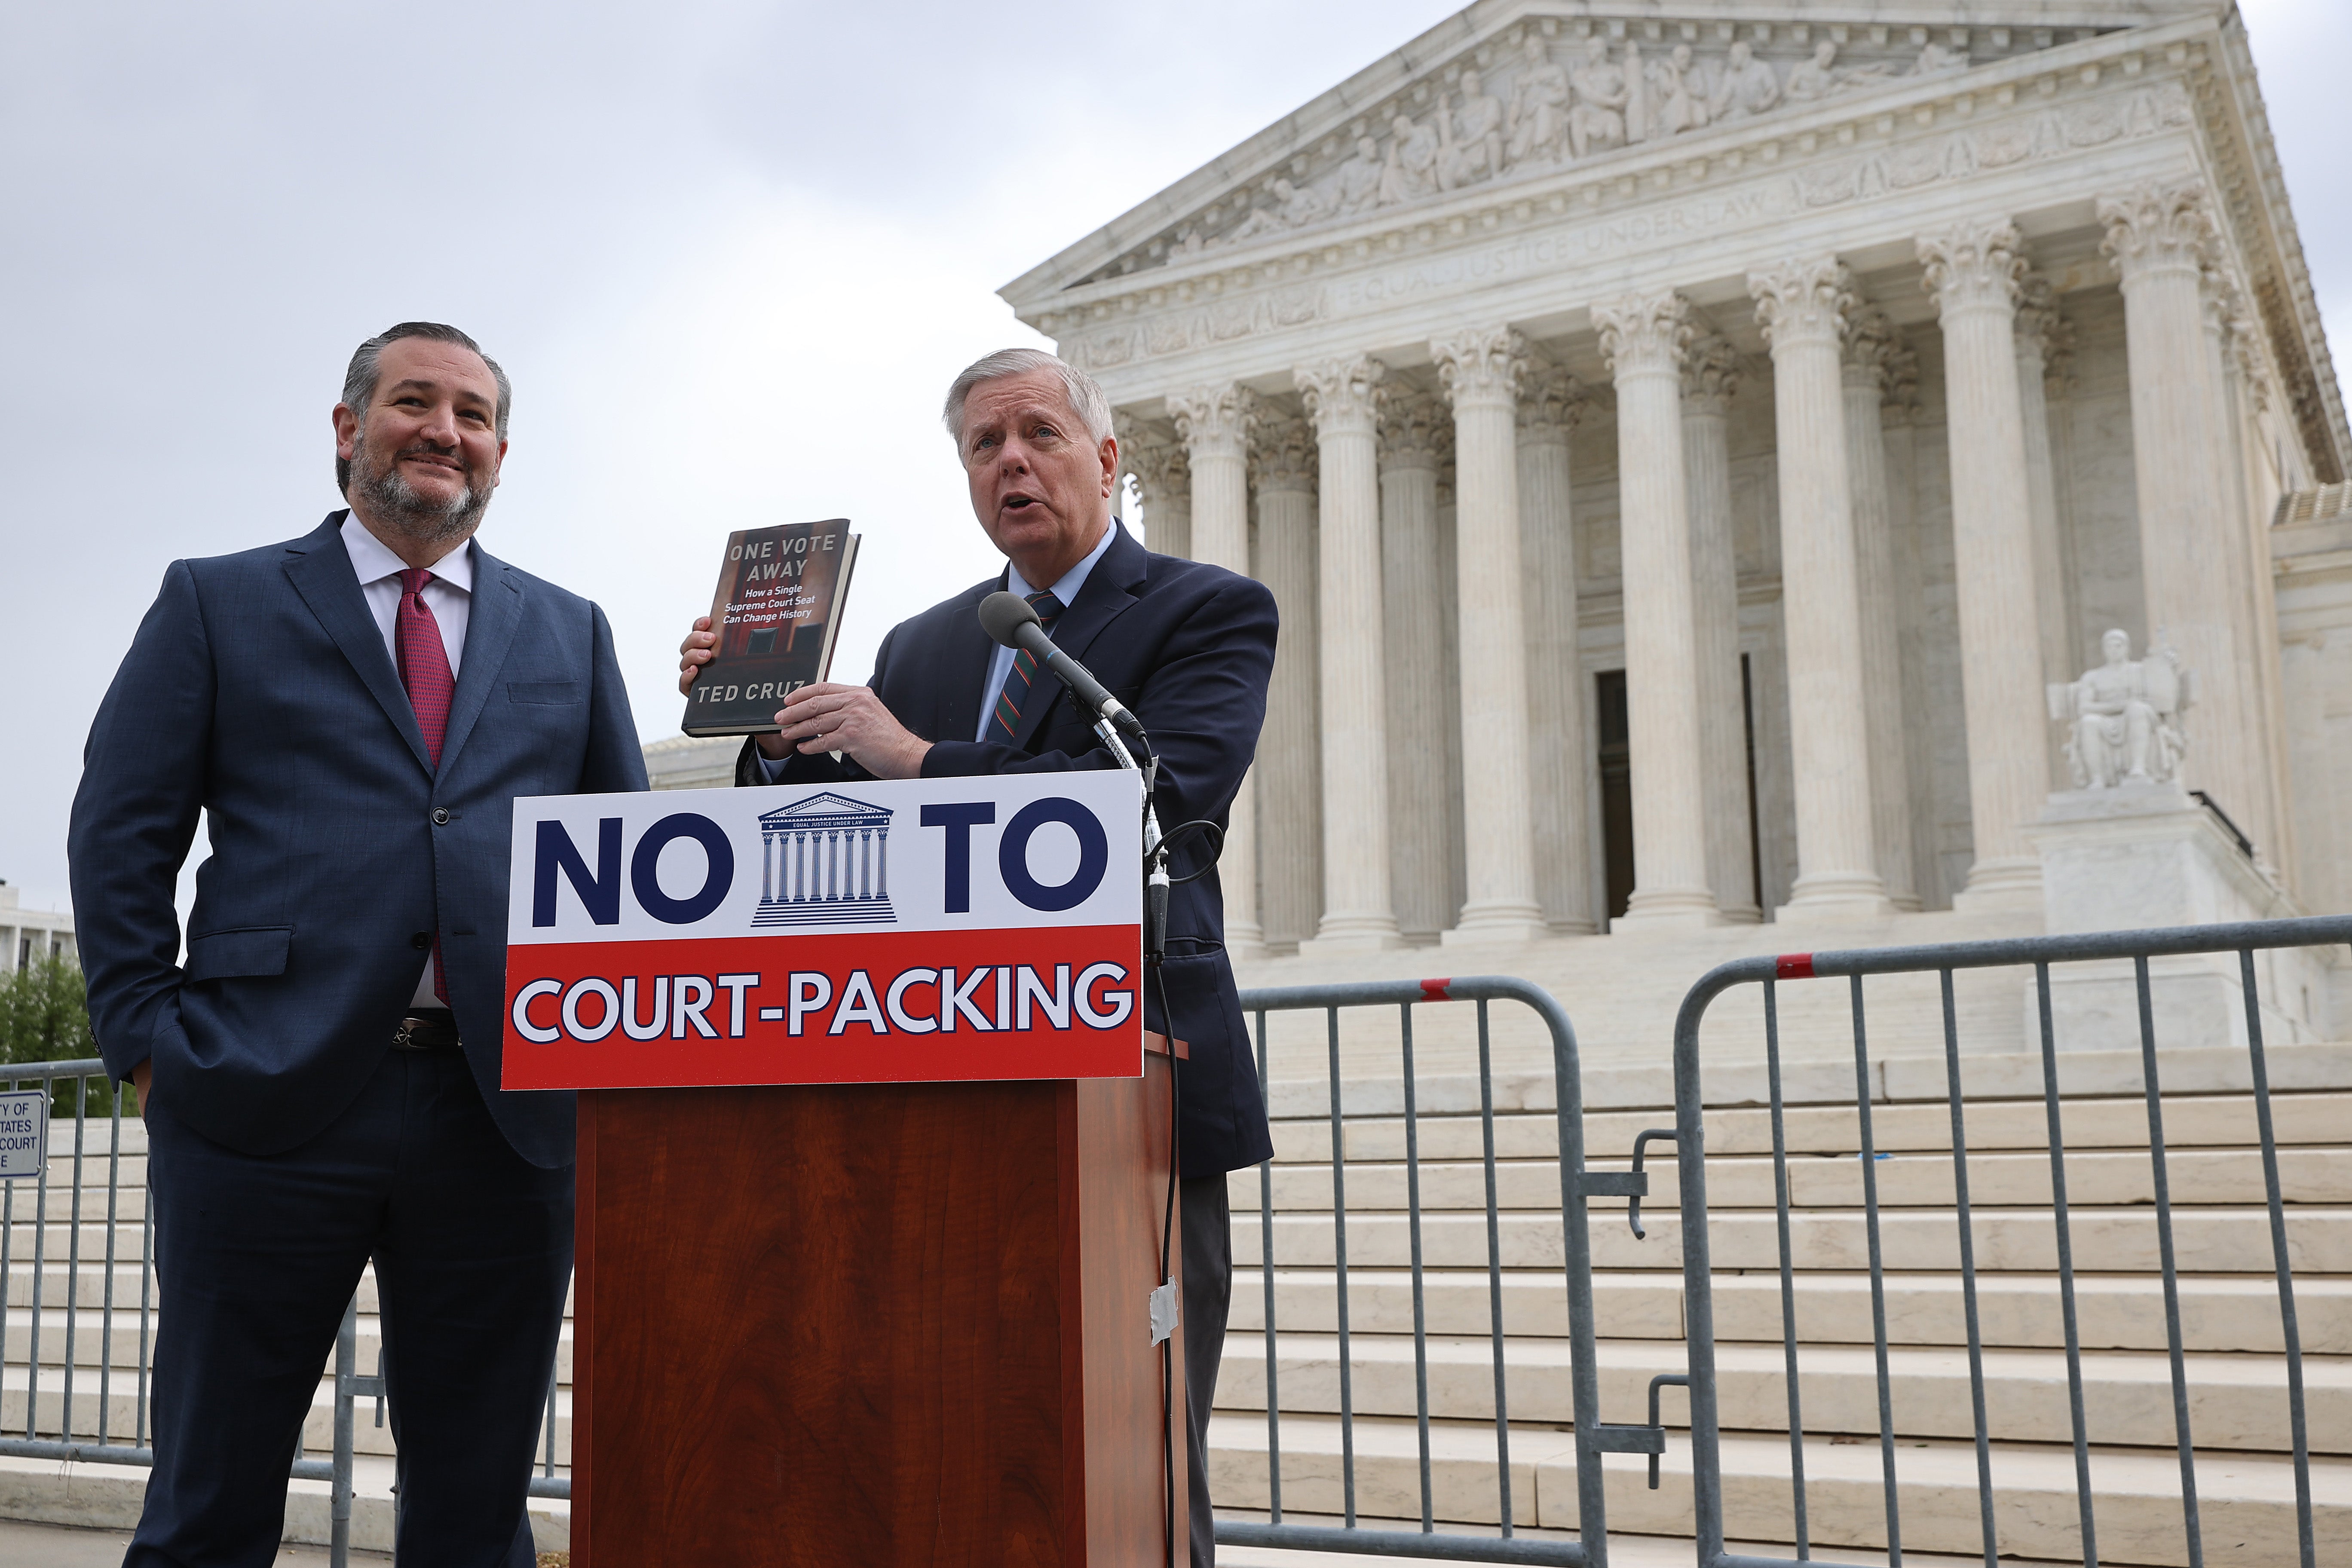 Senators Graham and Cruz speak out against expanding Supreme Court during a news conference